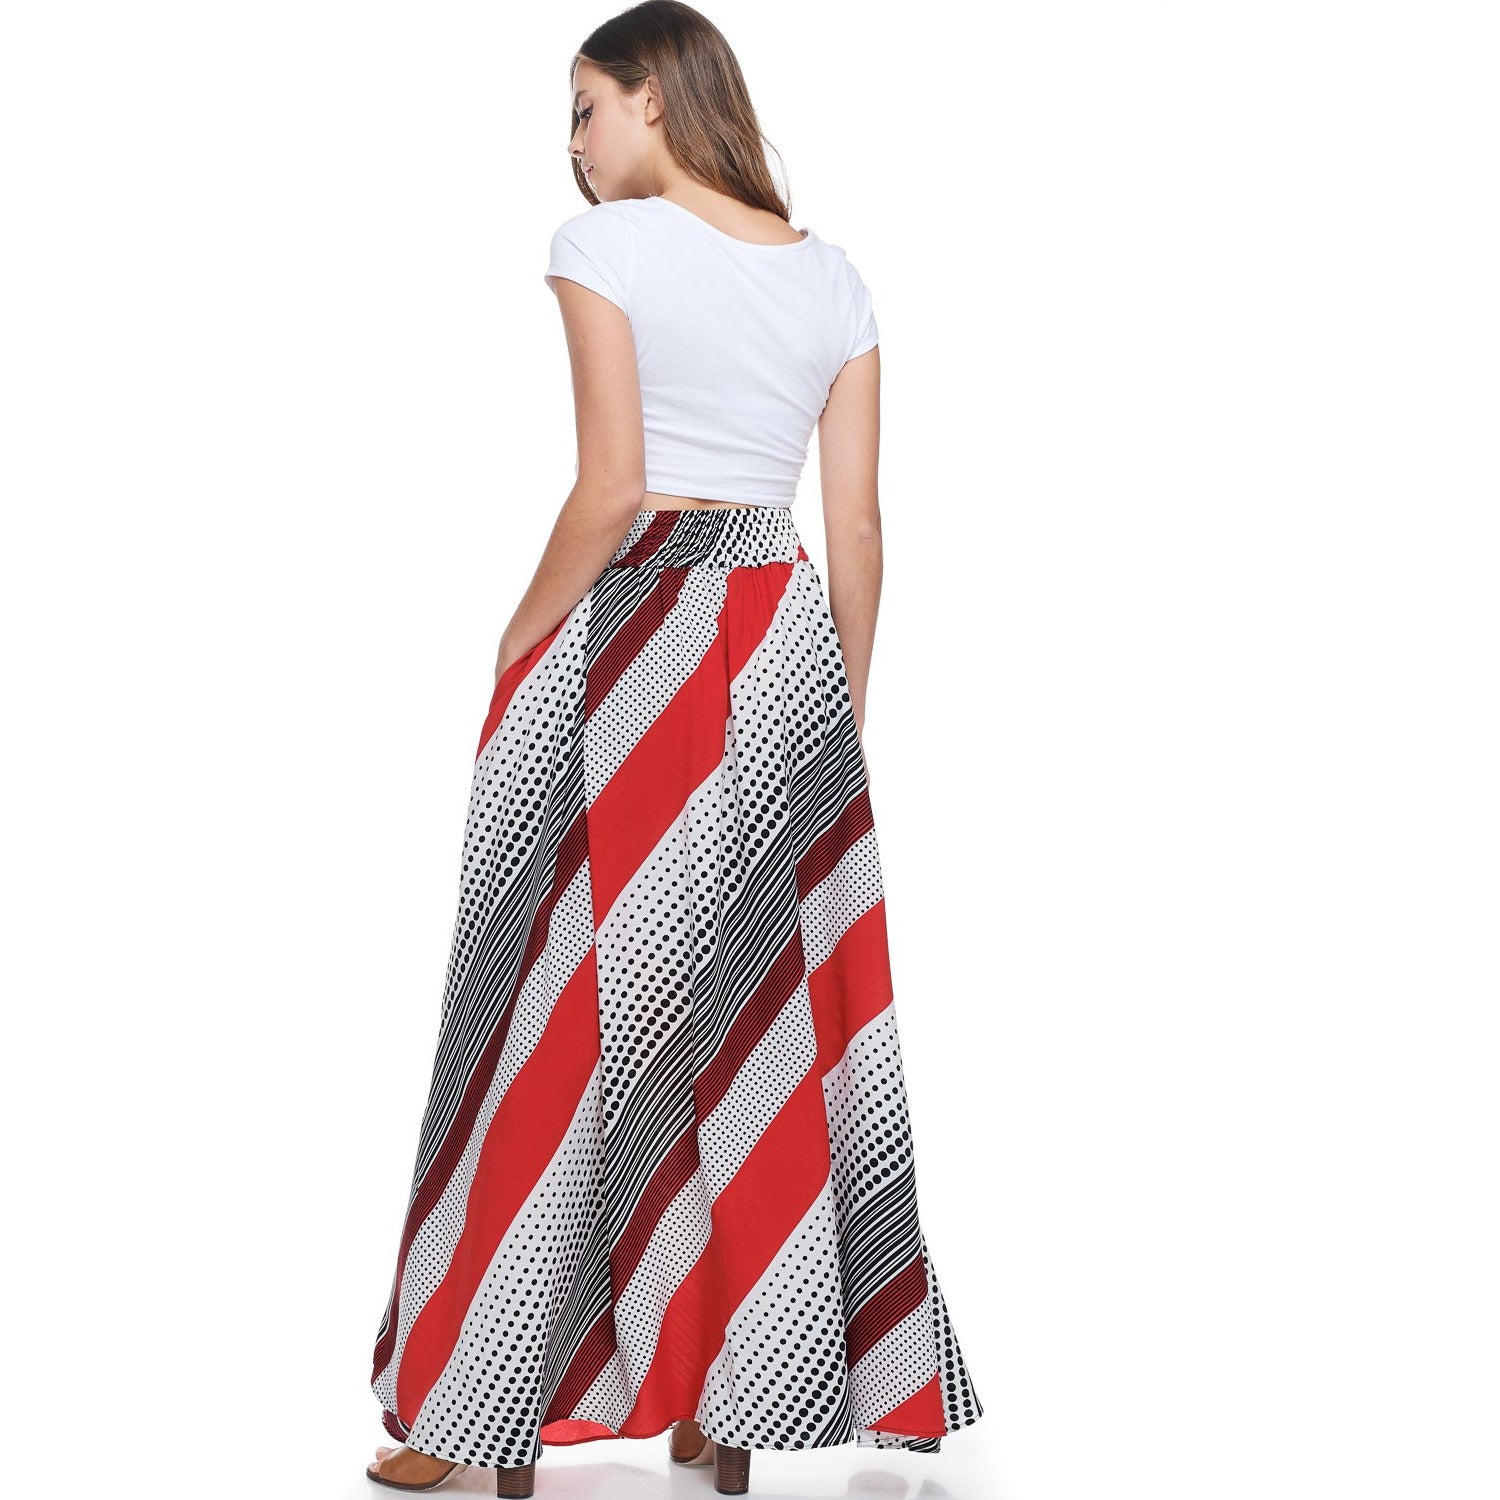 Kenya Box Pleat Maxi Skirt - Ariya's Apparel and Accessories